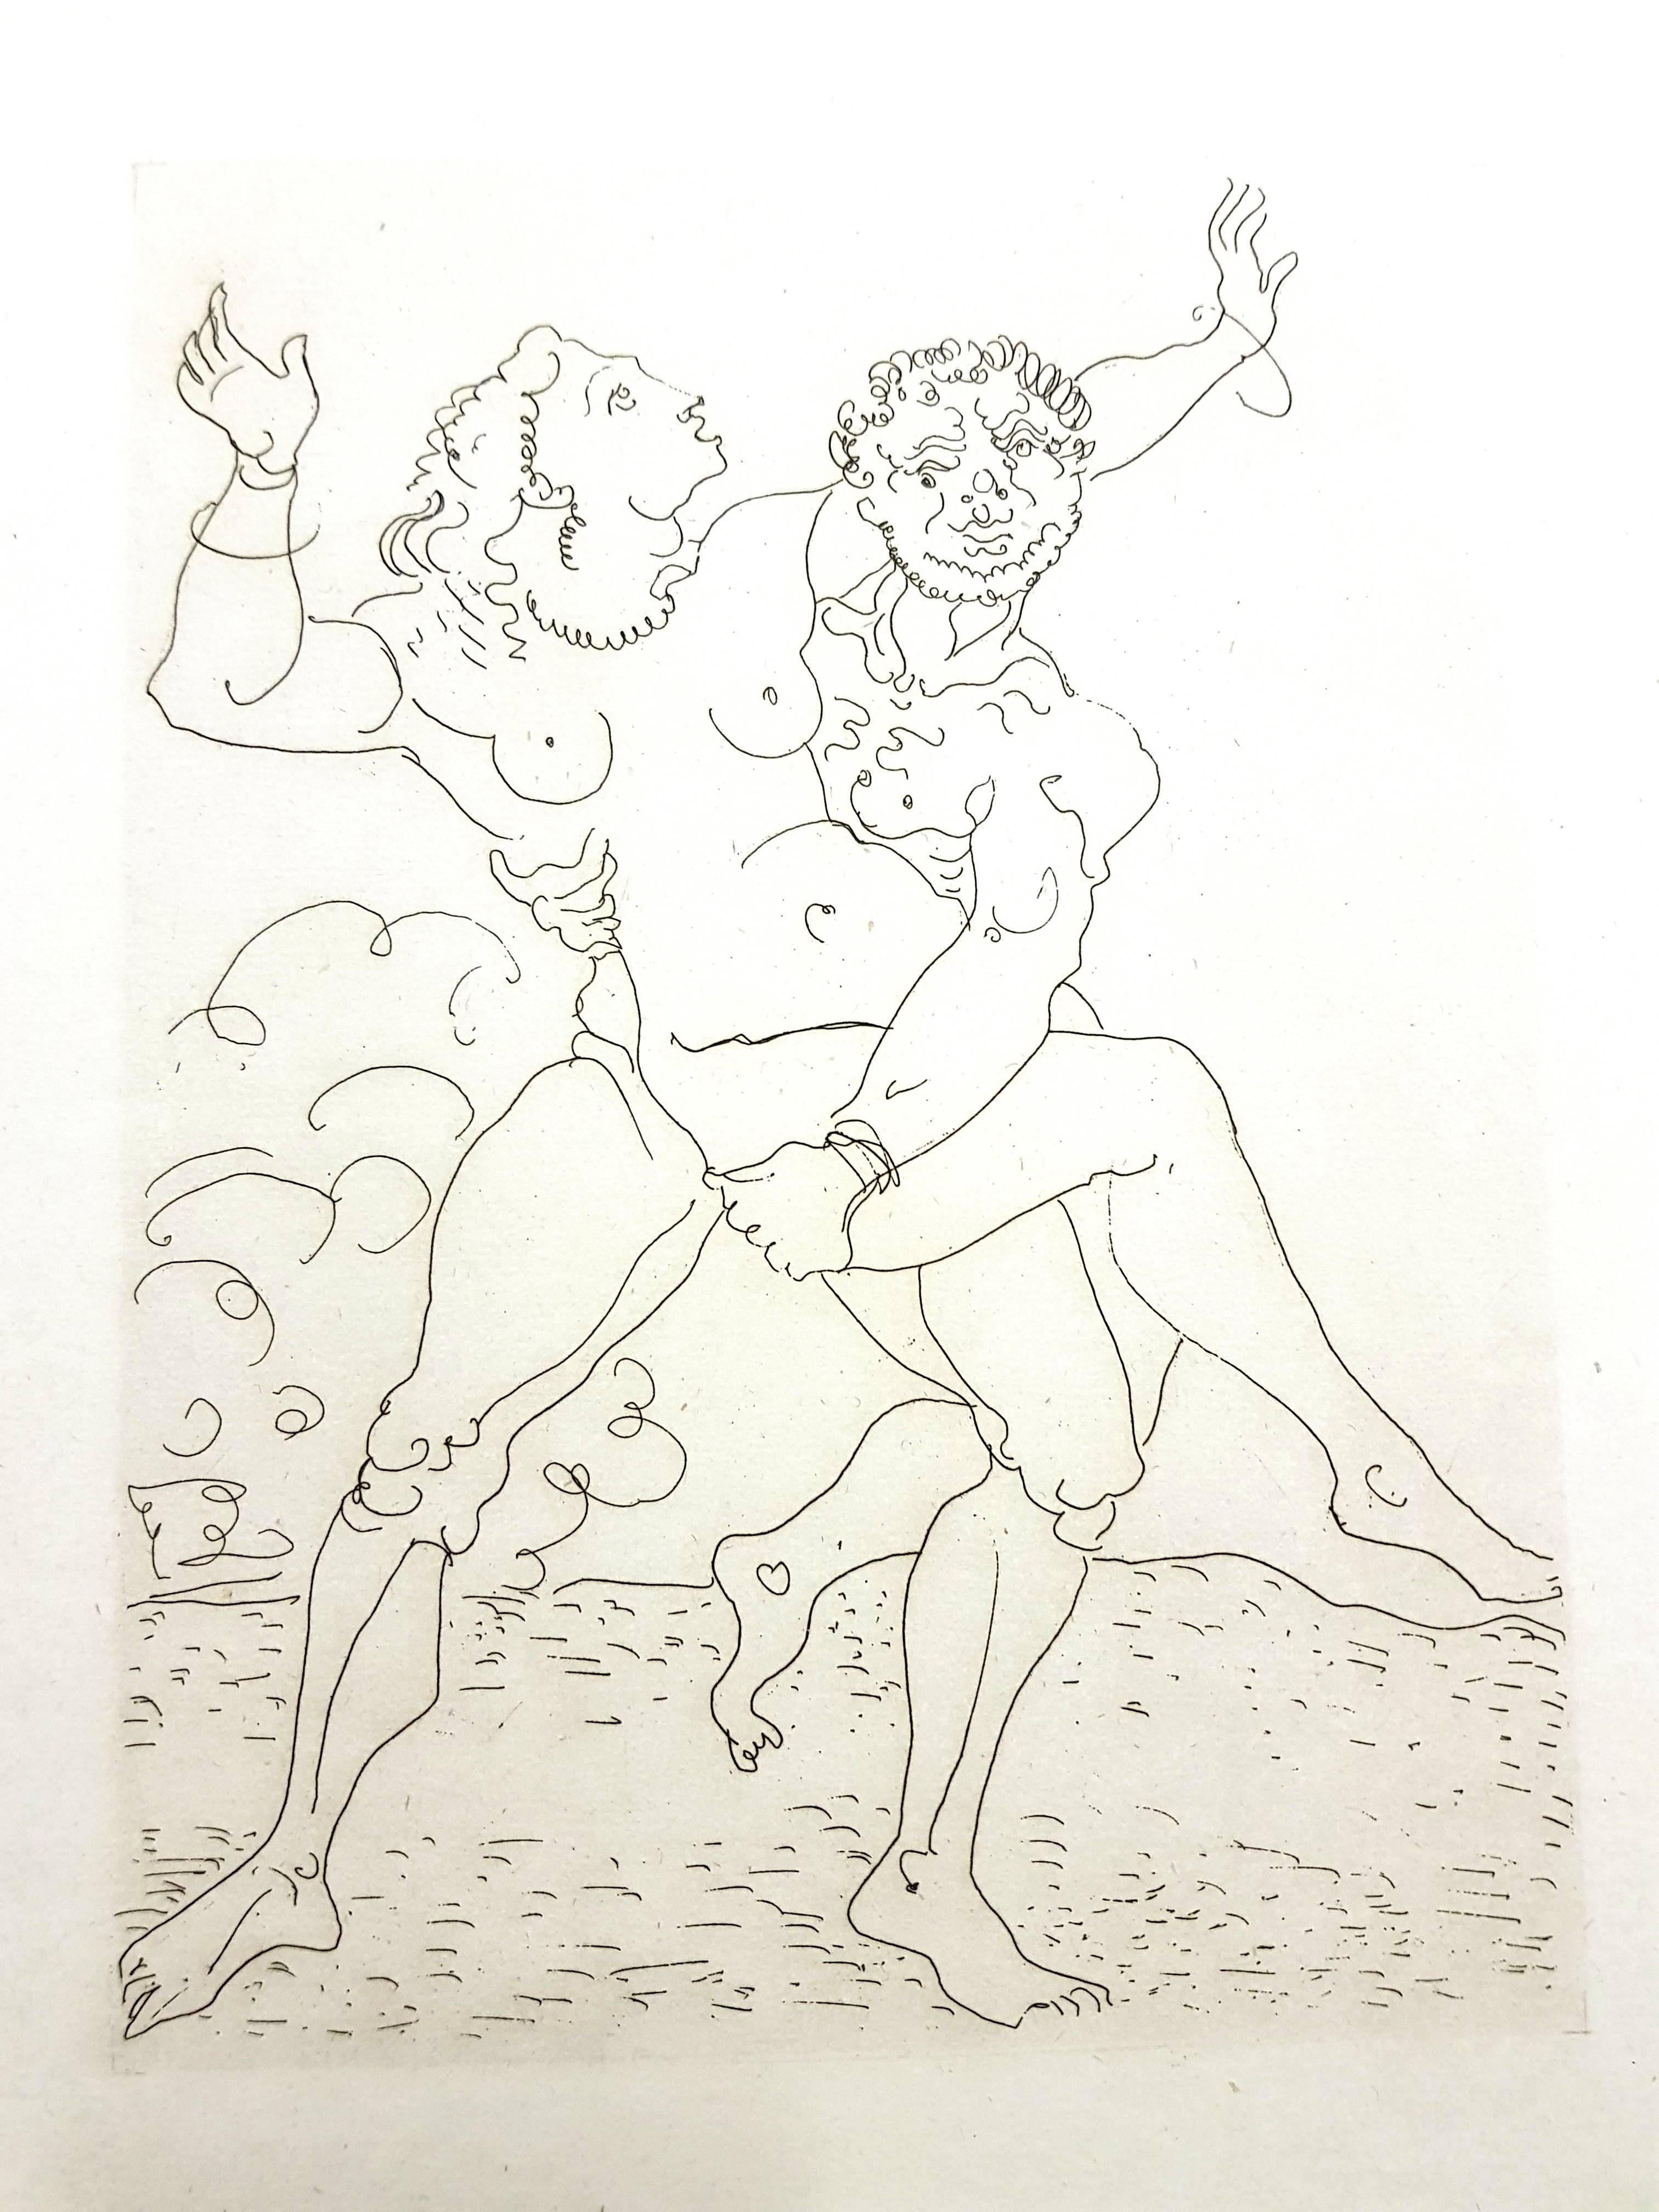 André Derain - Ovid's Heroides 
Original Etching
Edition of 134
Dimensions: 32 x 25 cm
Ovide [Marcel Prevost], Héroïdes, Paris, Société des Cent-une, 1938

Andre Derain was born in 1880 in Chatou, an artist colony outside Paris. In 1898, he enrolled